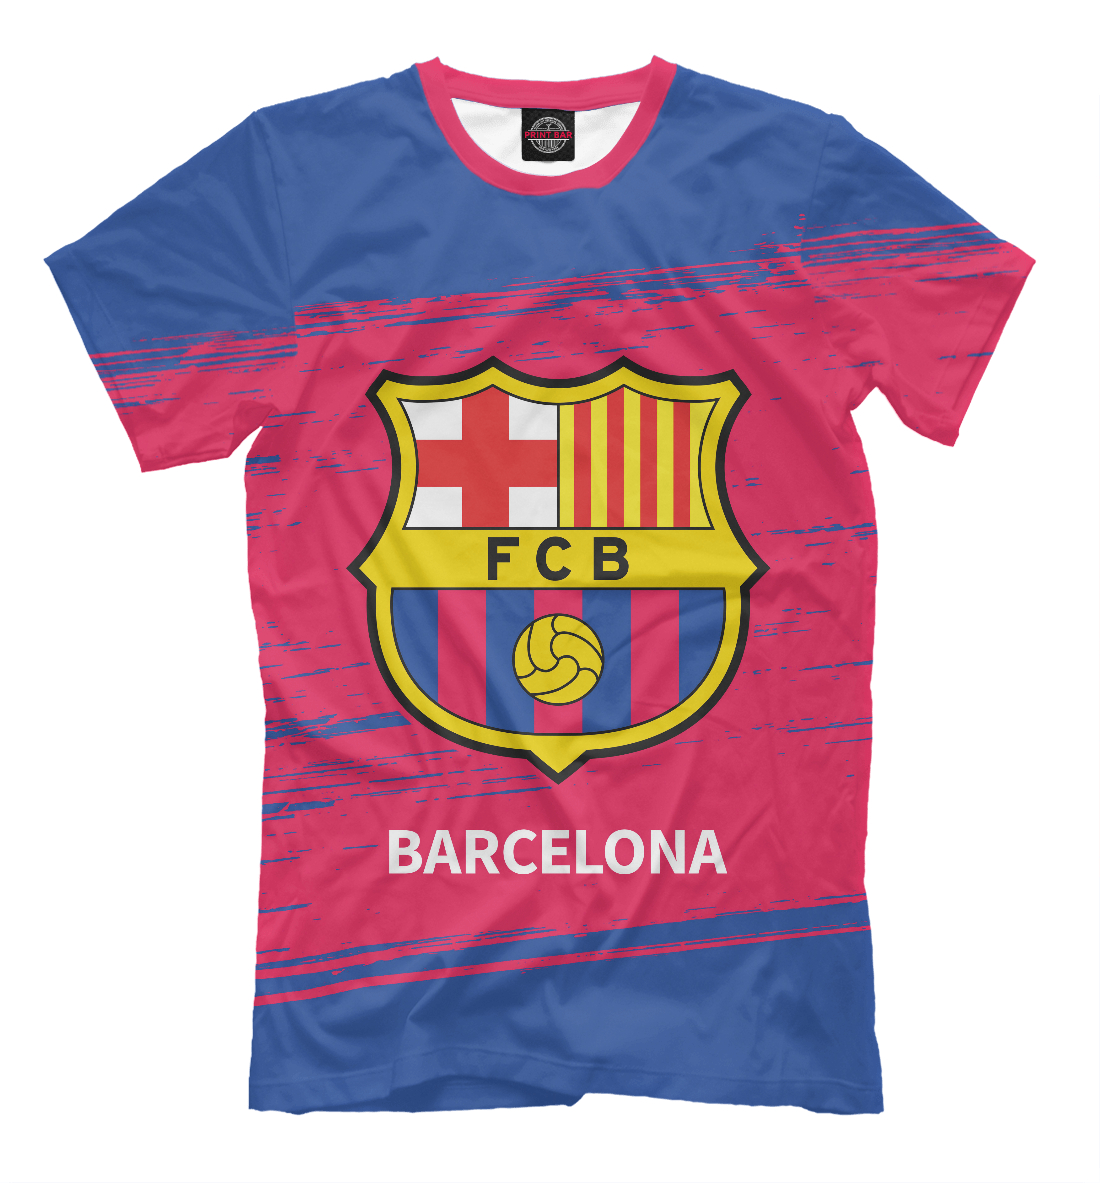 Футболка Barcelona / Барселона для мальчиков, артикул: BAR-635352-fut-2mp